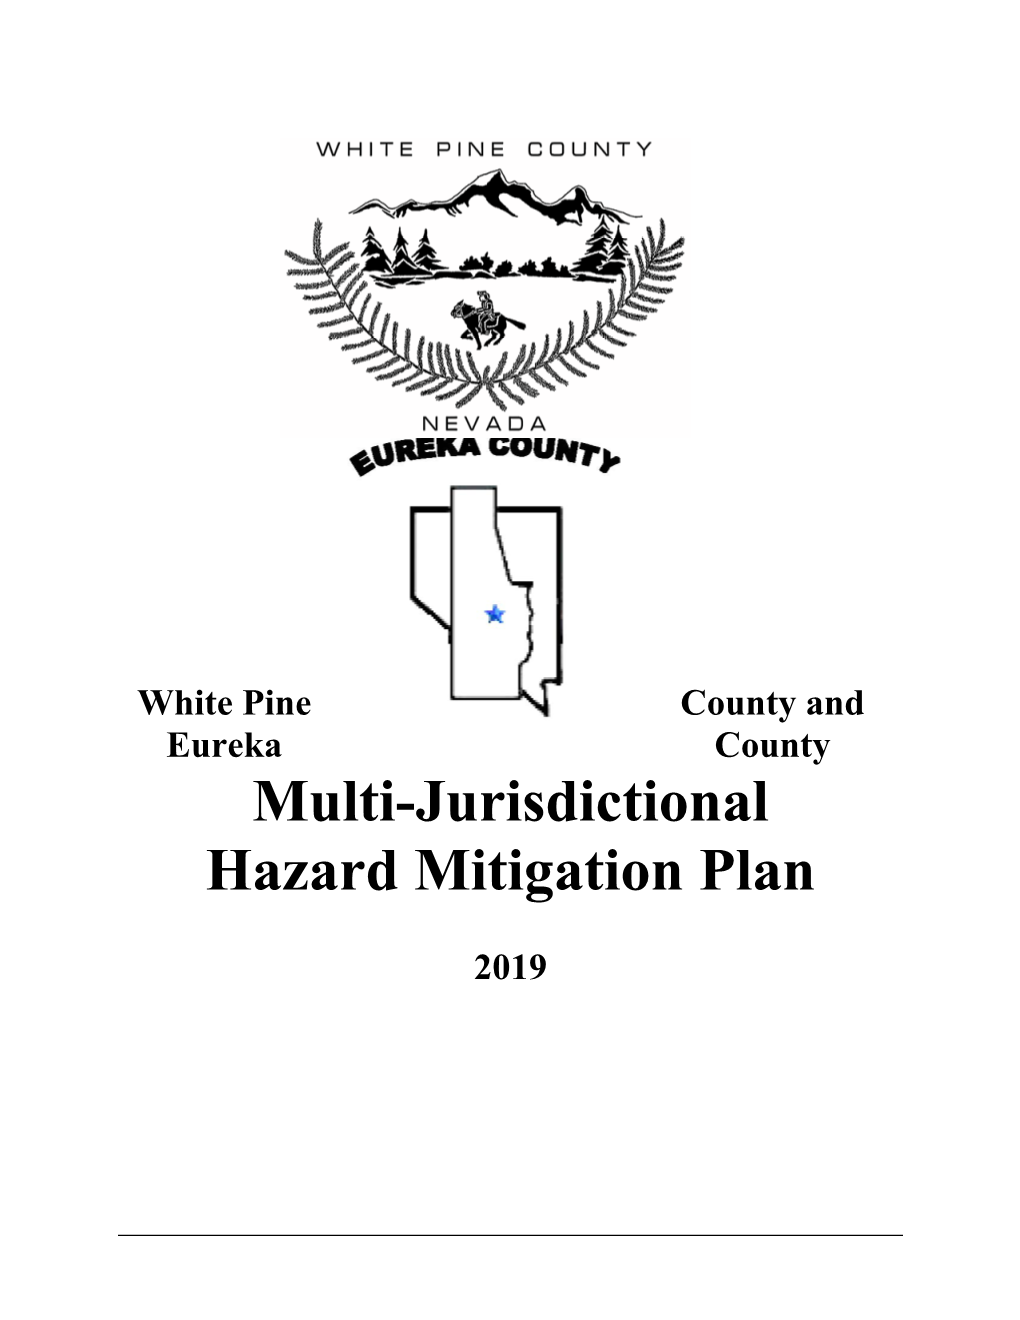 Multi-Jurisdictional Hazard Mitigation Plan